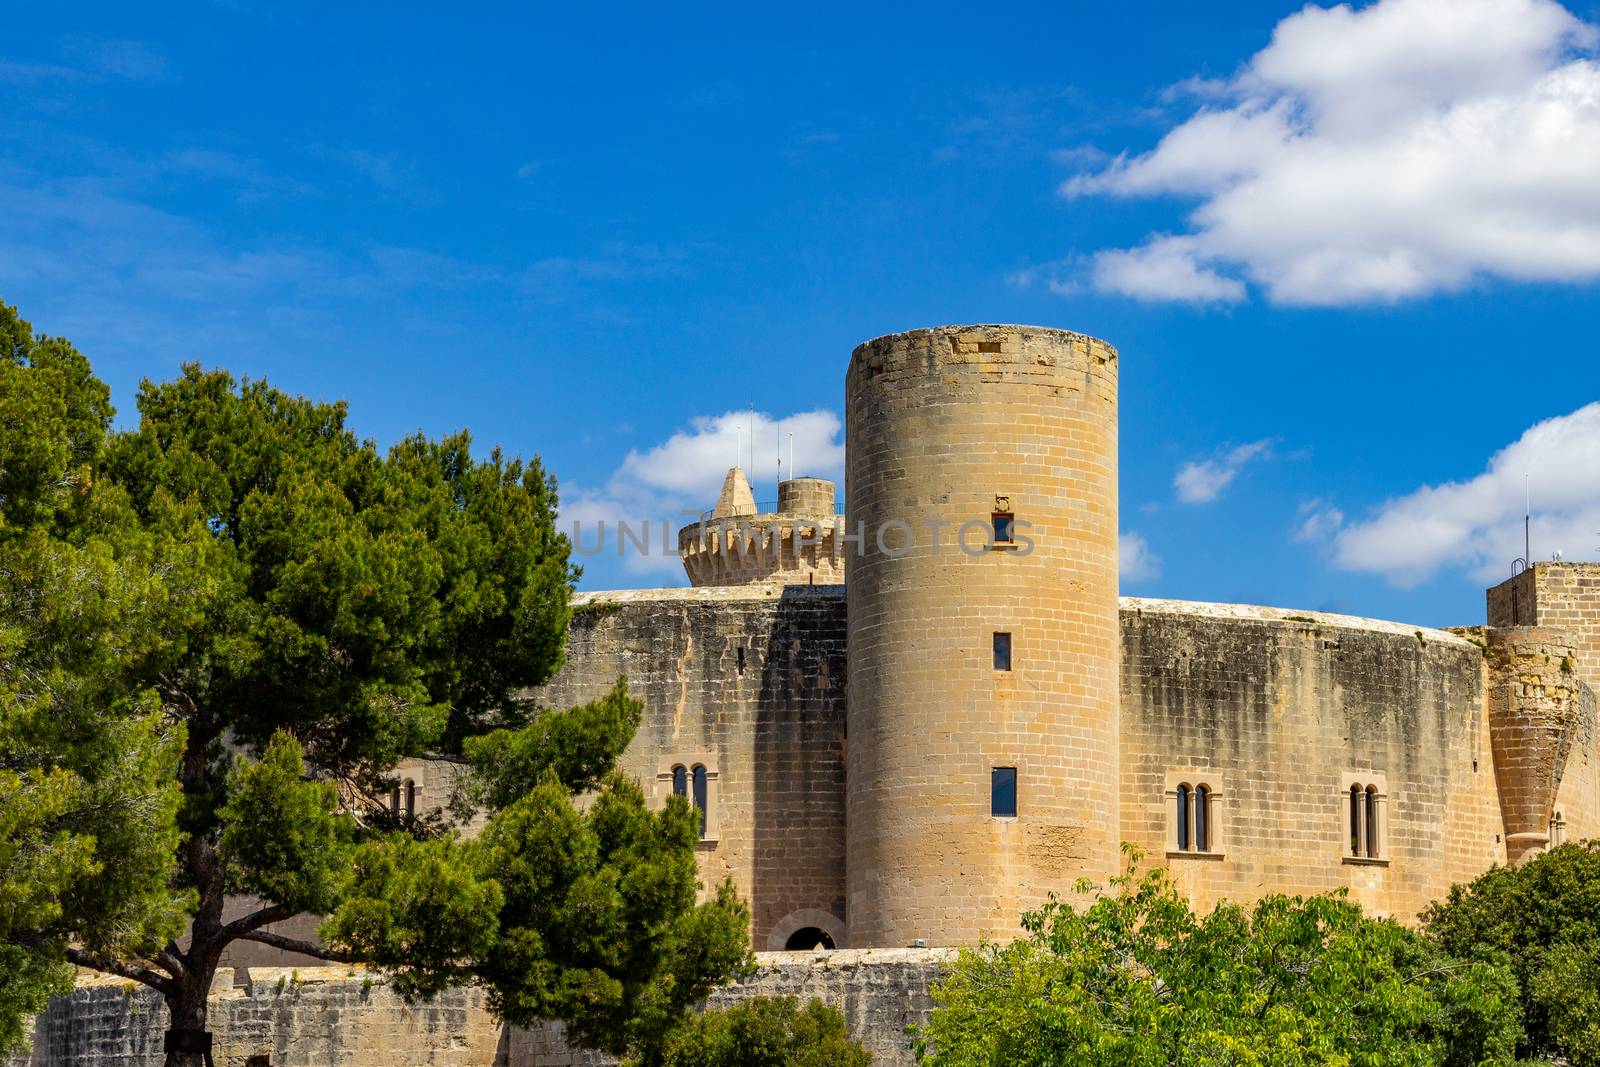 Castell de Bellver in Palma de Mallorca, Spain by reinerc